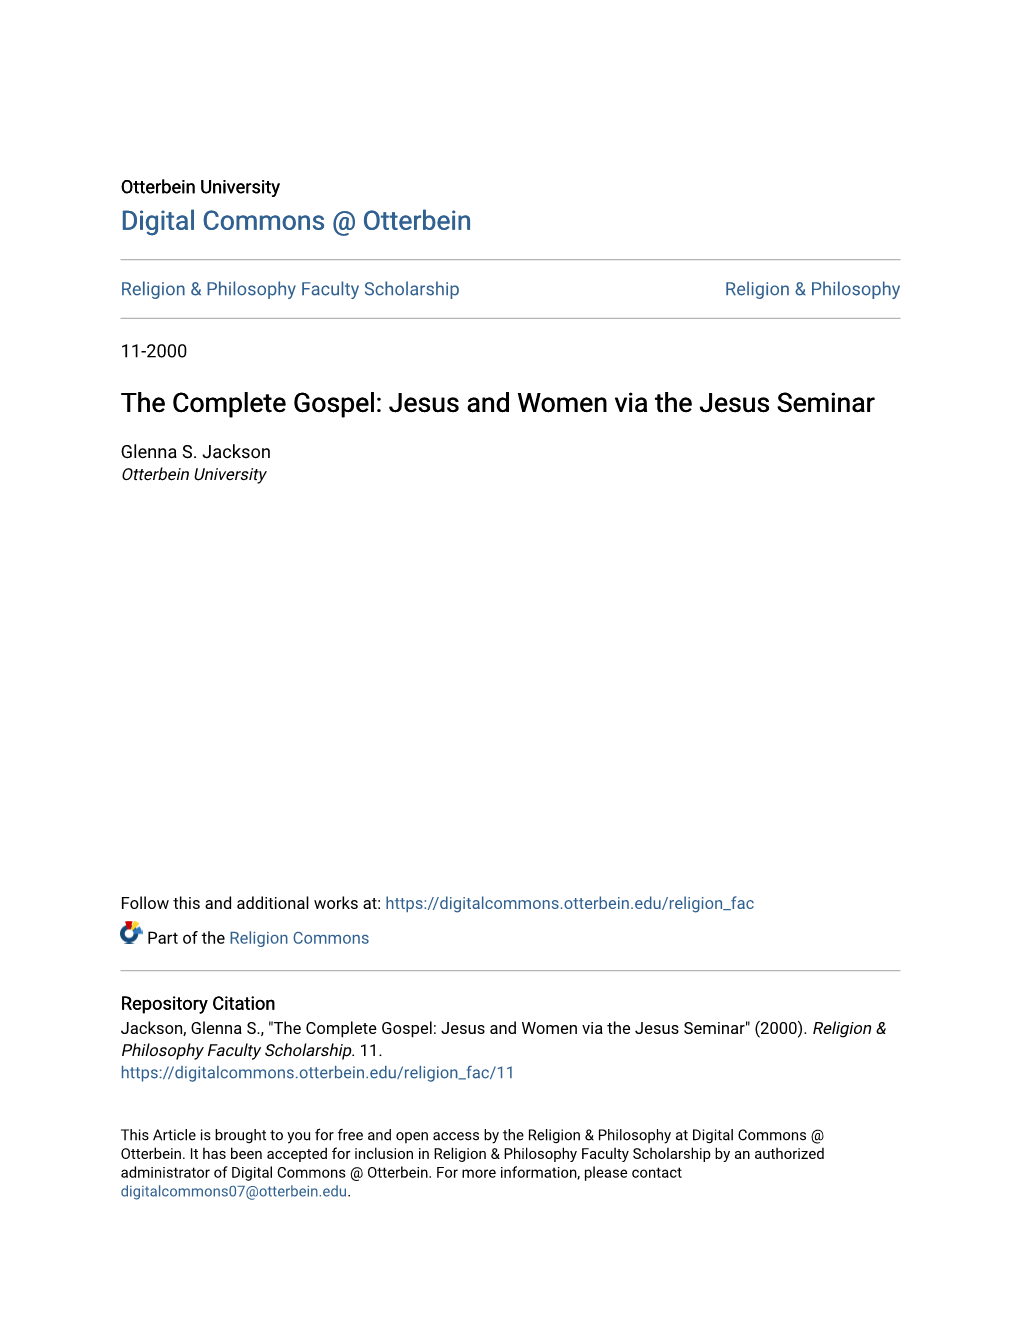 The Complete Gospel: Jesus and Women Via the Jesus Seminar